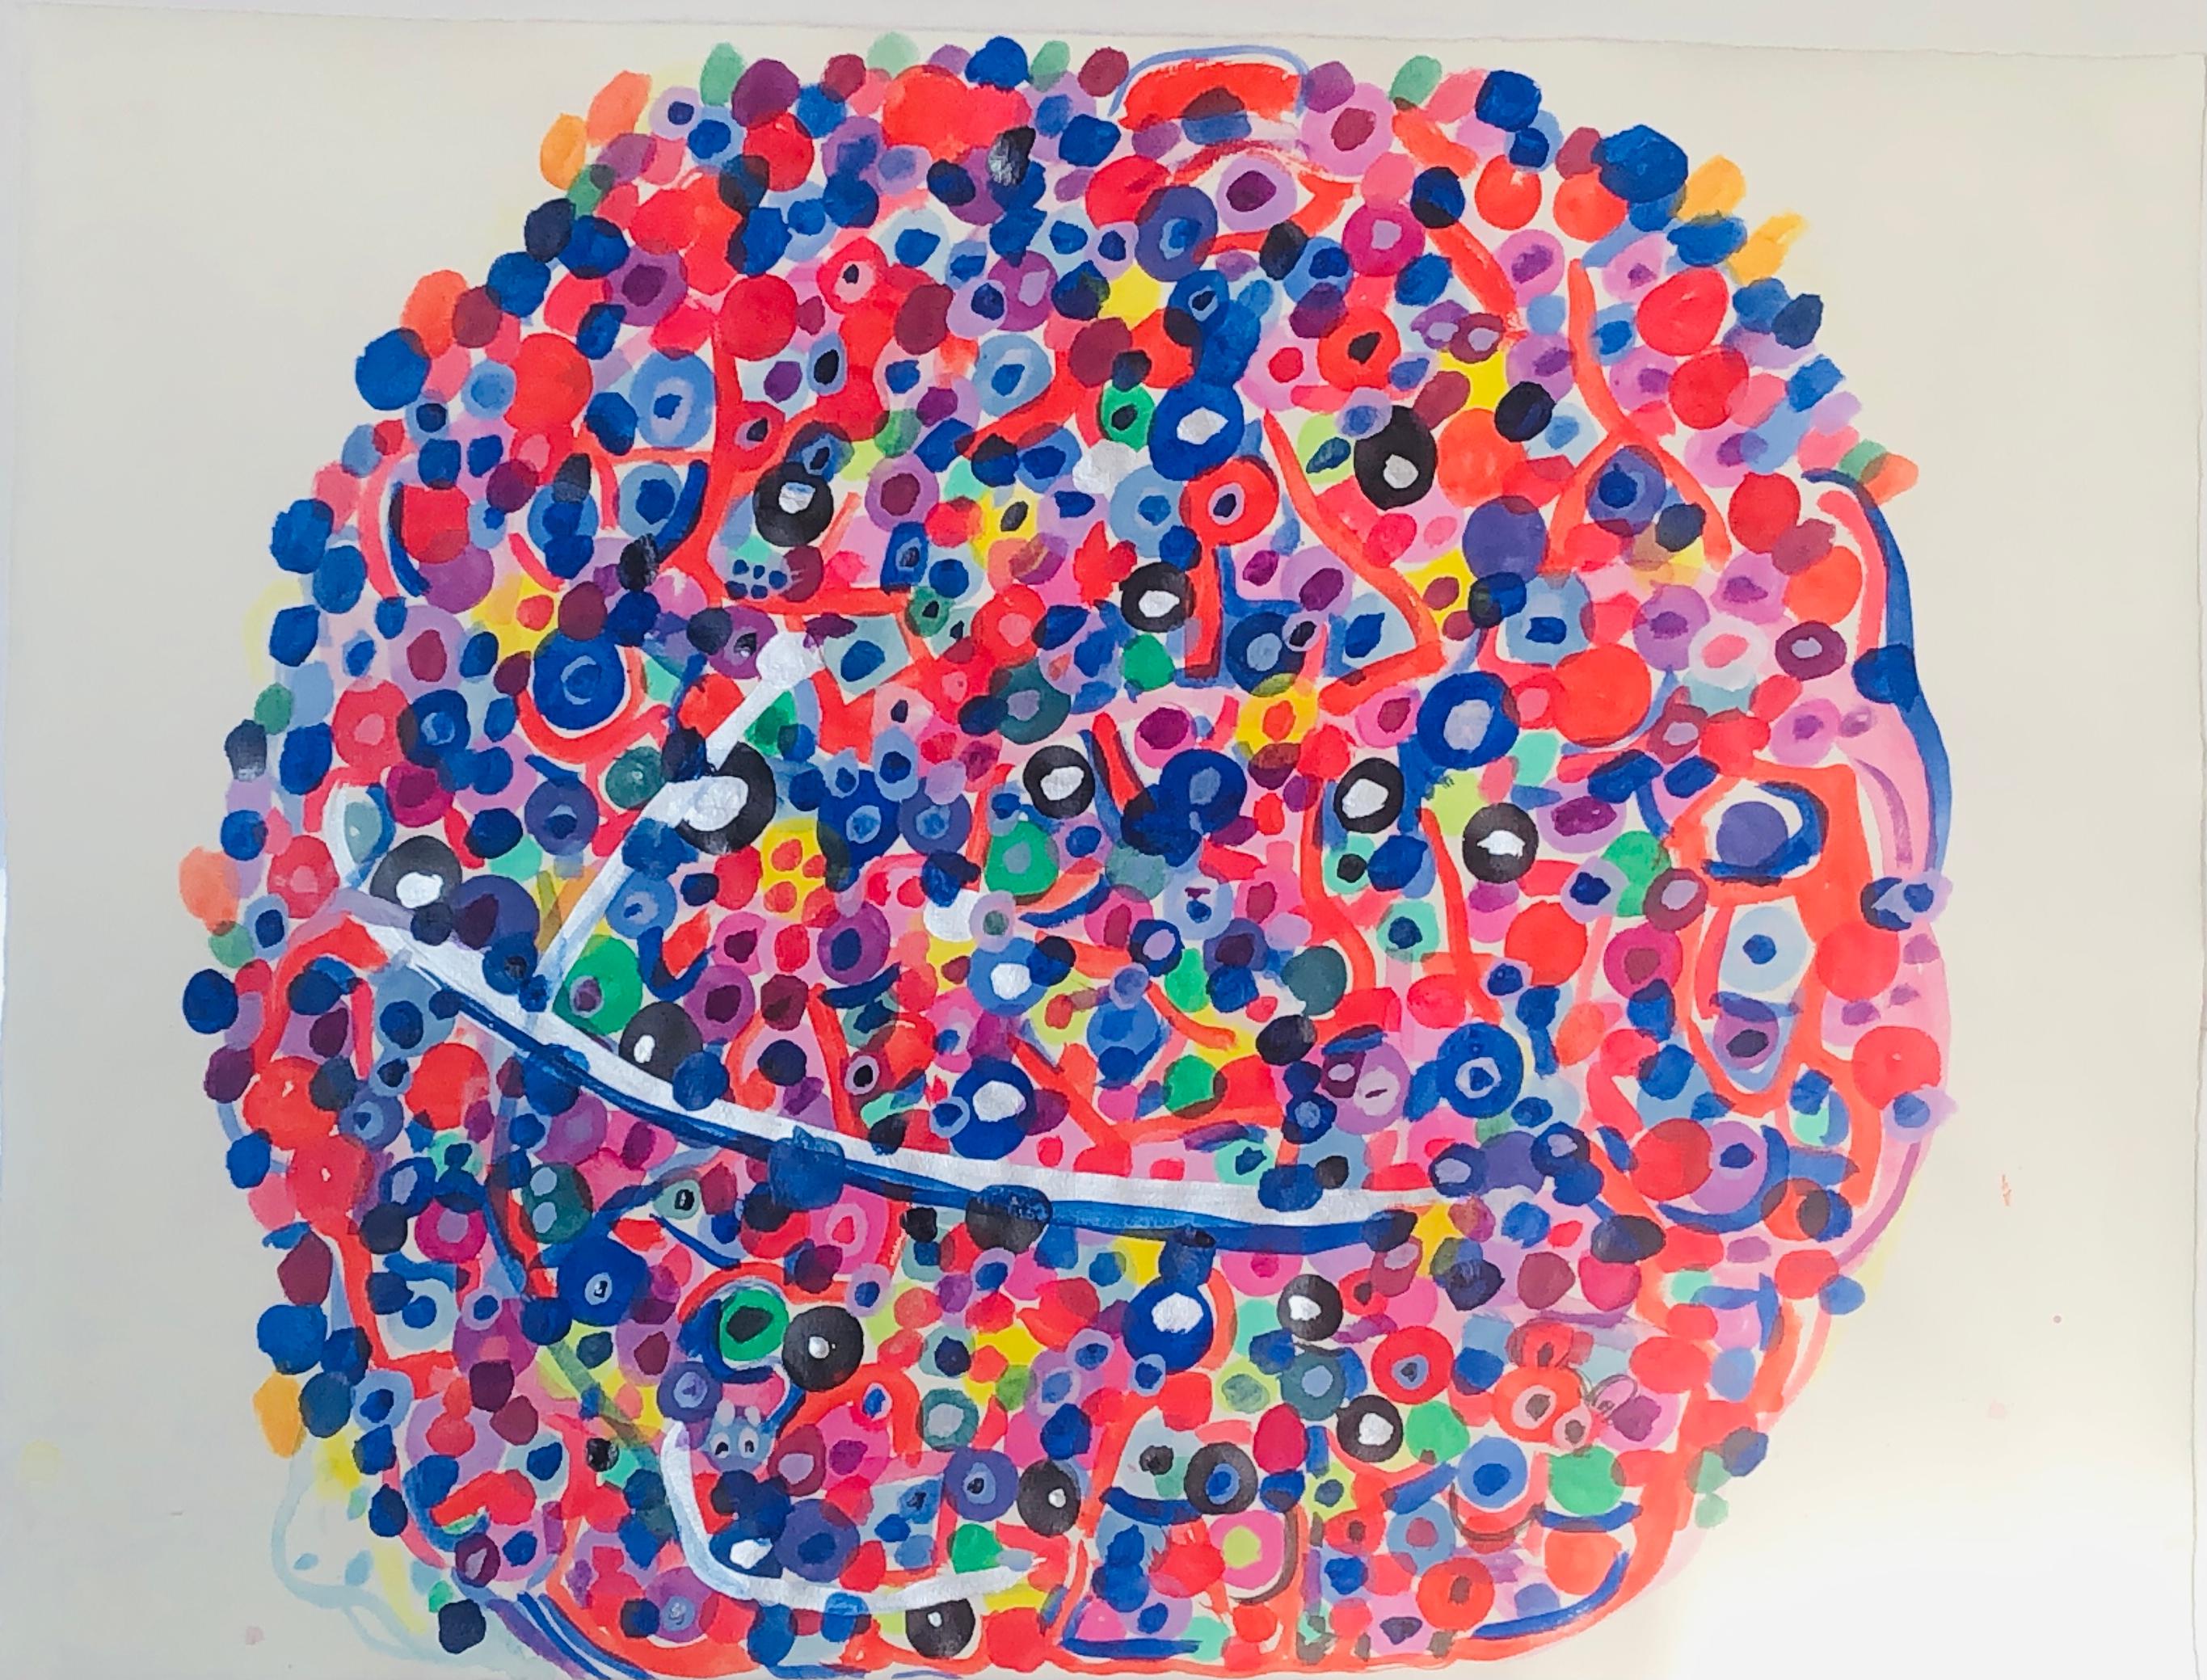 Nina Bovasso Abstract Painting - Red Ball of Balls